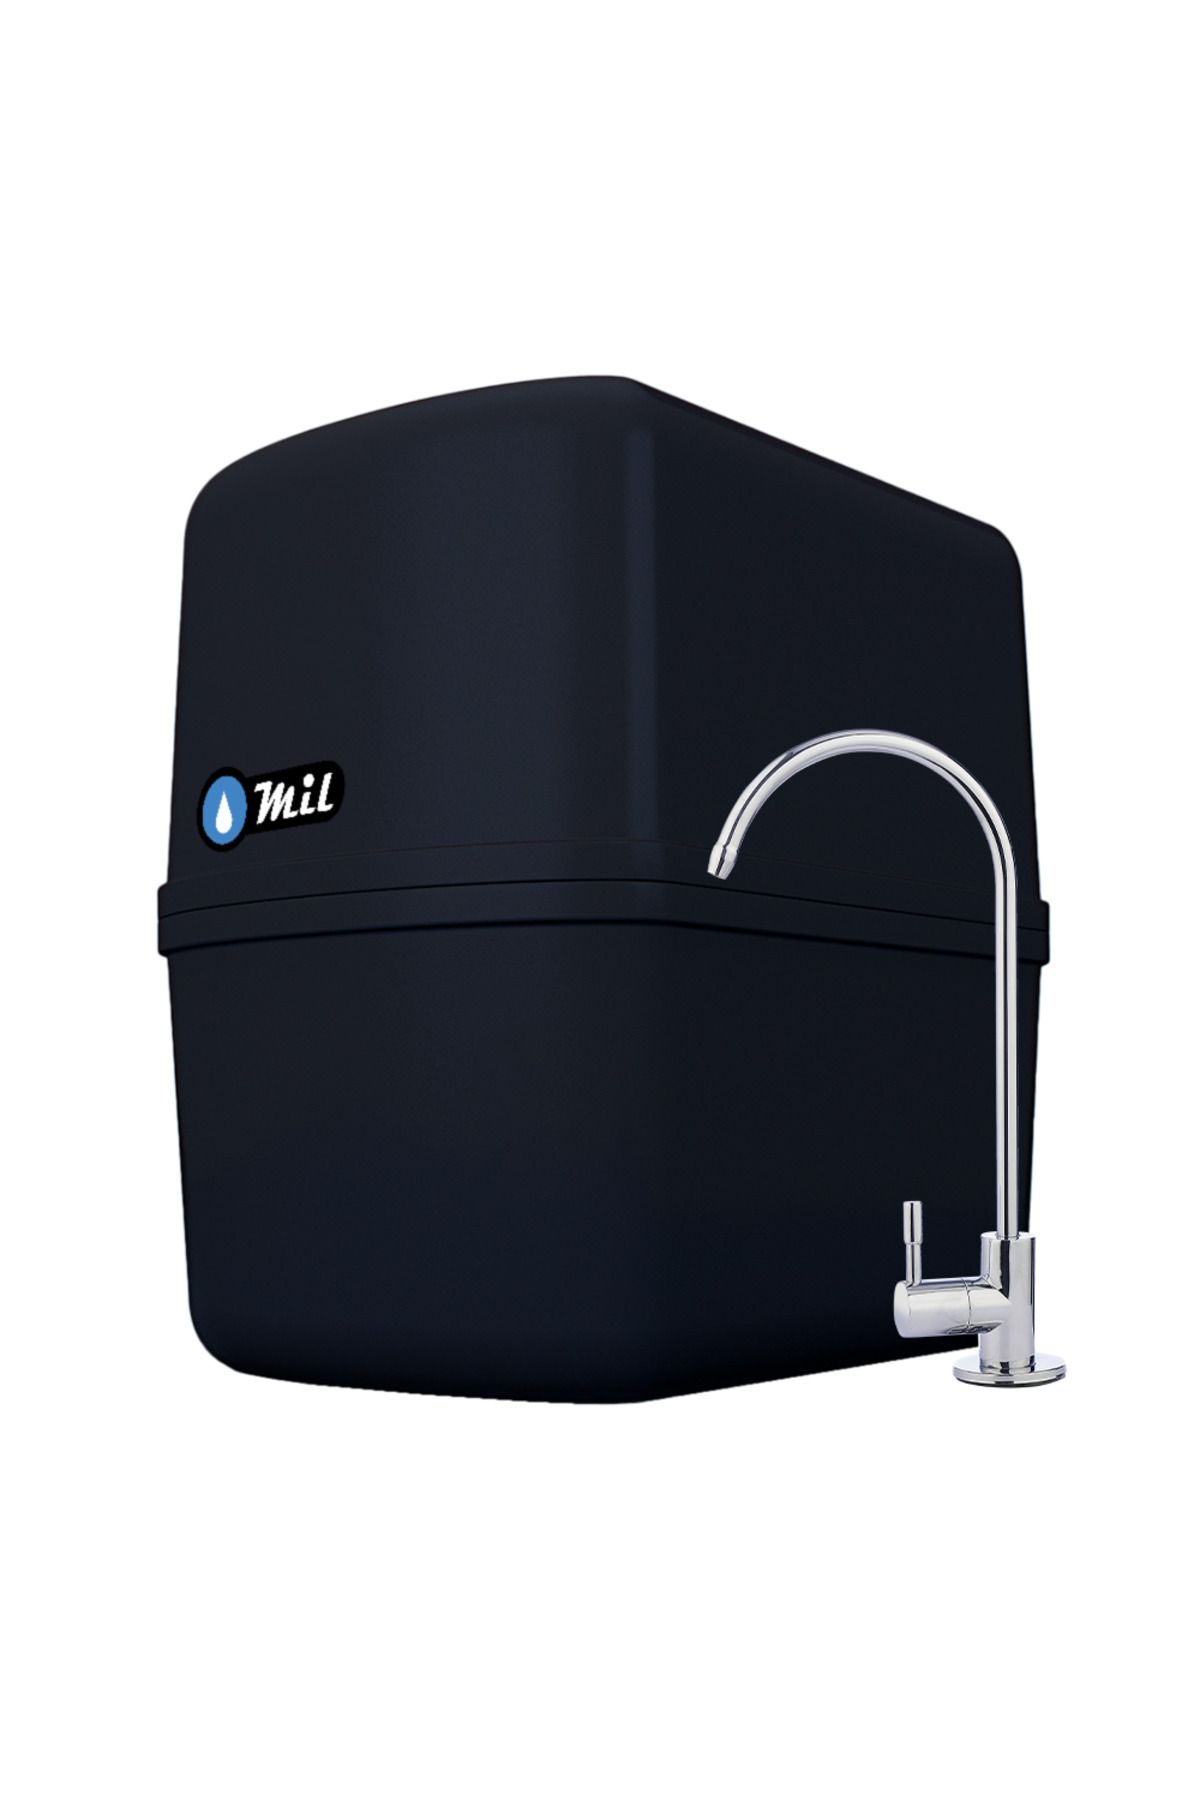 Mil Elegance 80 Gpd Aquaflo Membranlı Çelik Tanklı Su Arıtma Cihazı (DNP5-M-A)